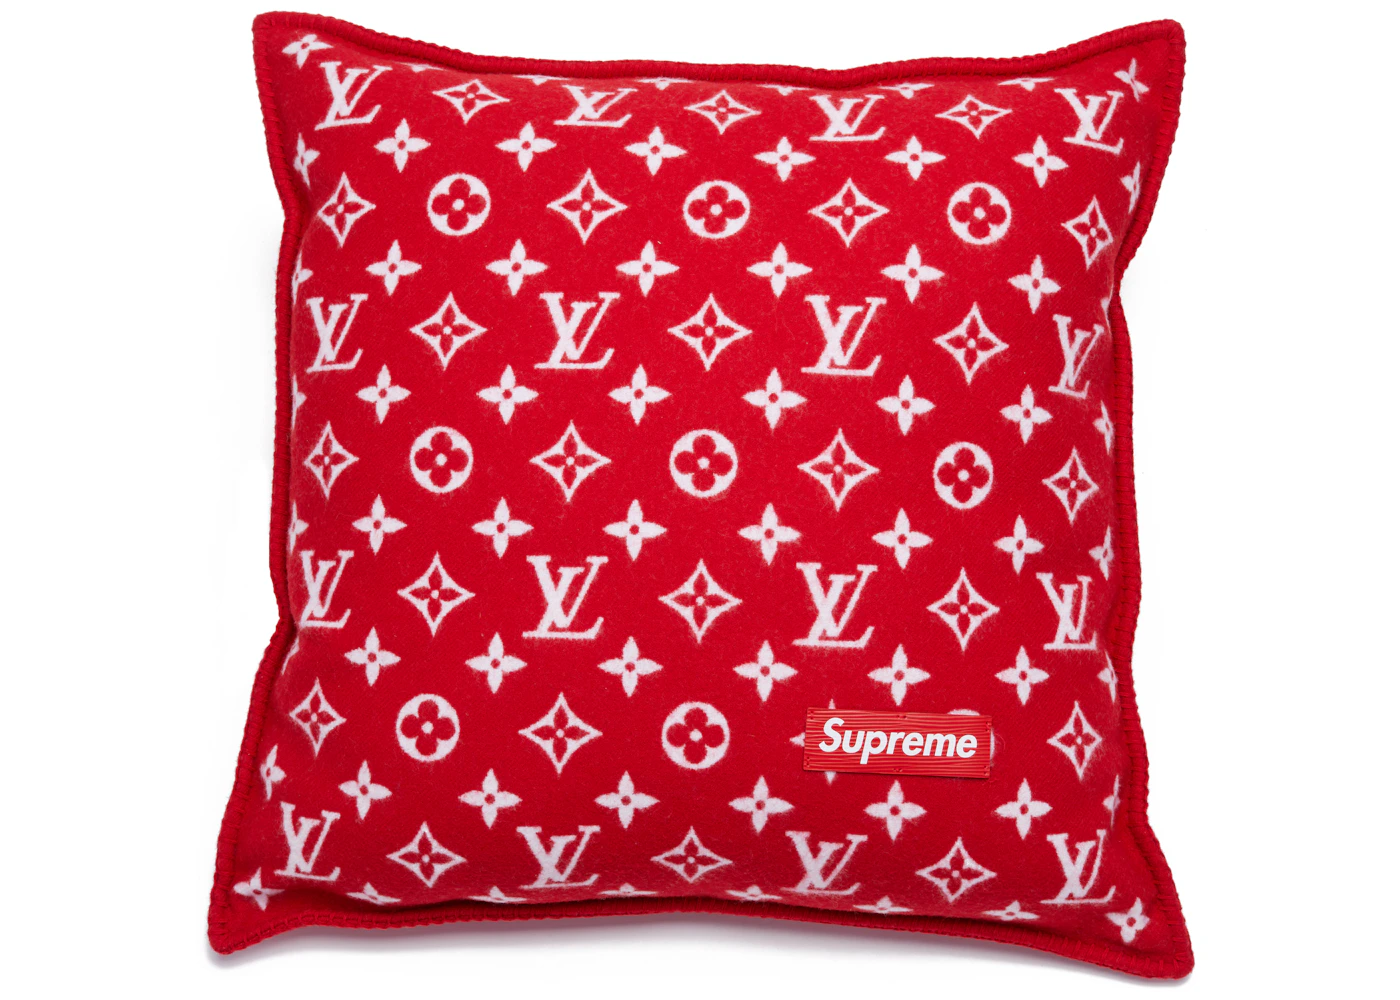 Supreme x Louis Vuitton LV Monogram Bandana Scarf Brown 100% Authentic  Japan New